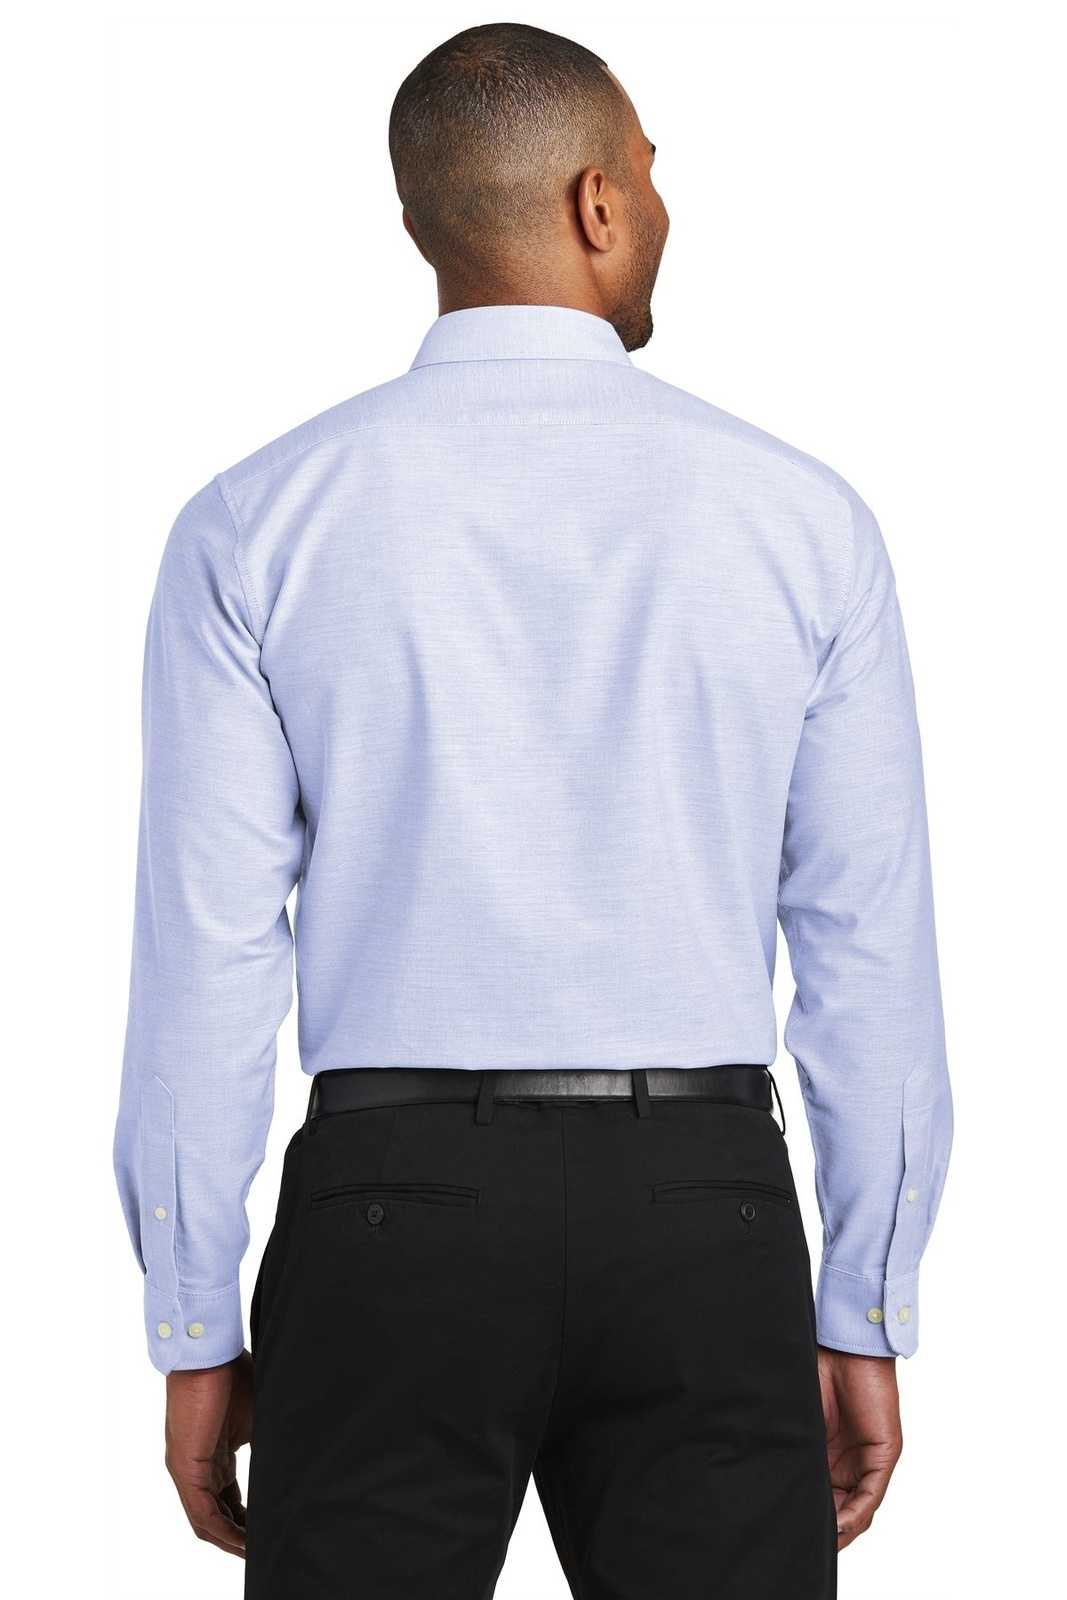 Port Authority S661 Slim Fit Superpro Oxford Shirt - Oxford Blue - HIT a Double - 2